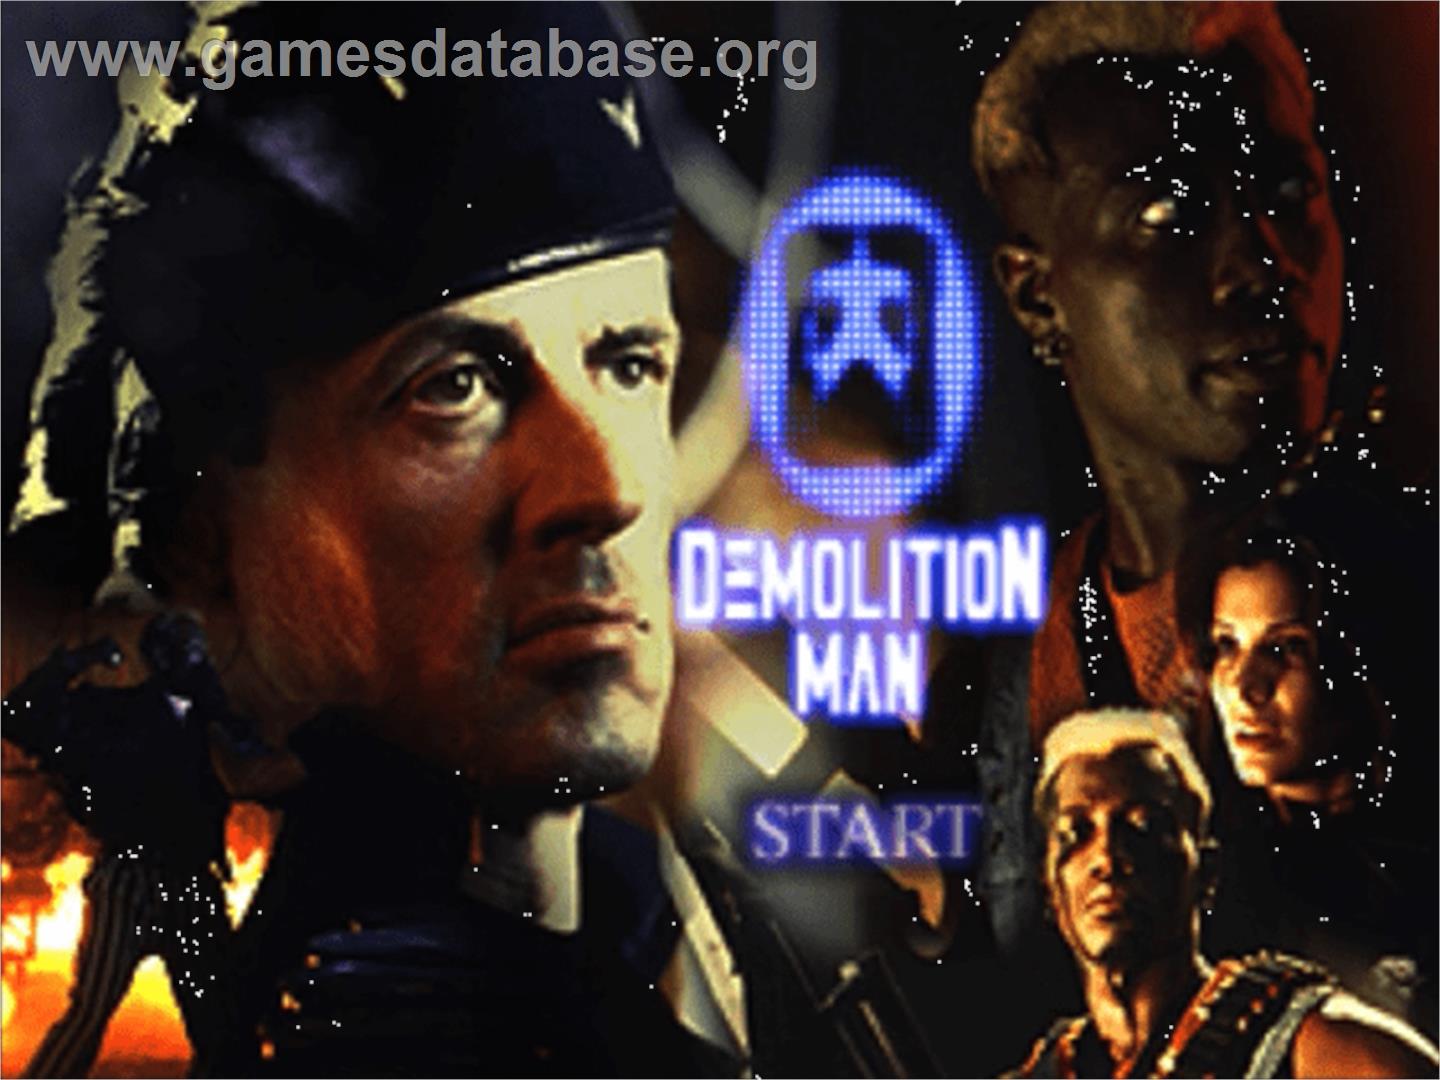 Demolition Man - Panasonic 3DO - Artwork - Title Screen